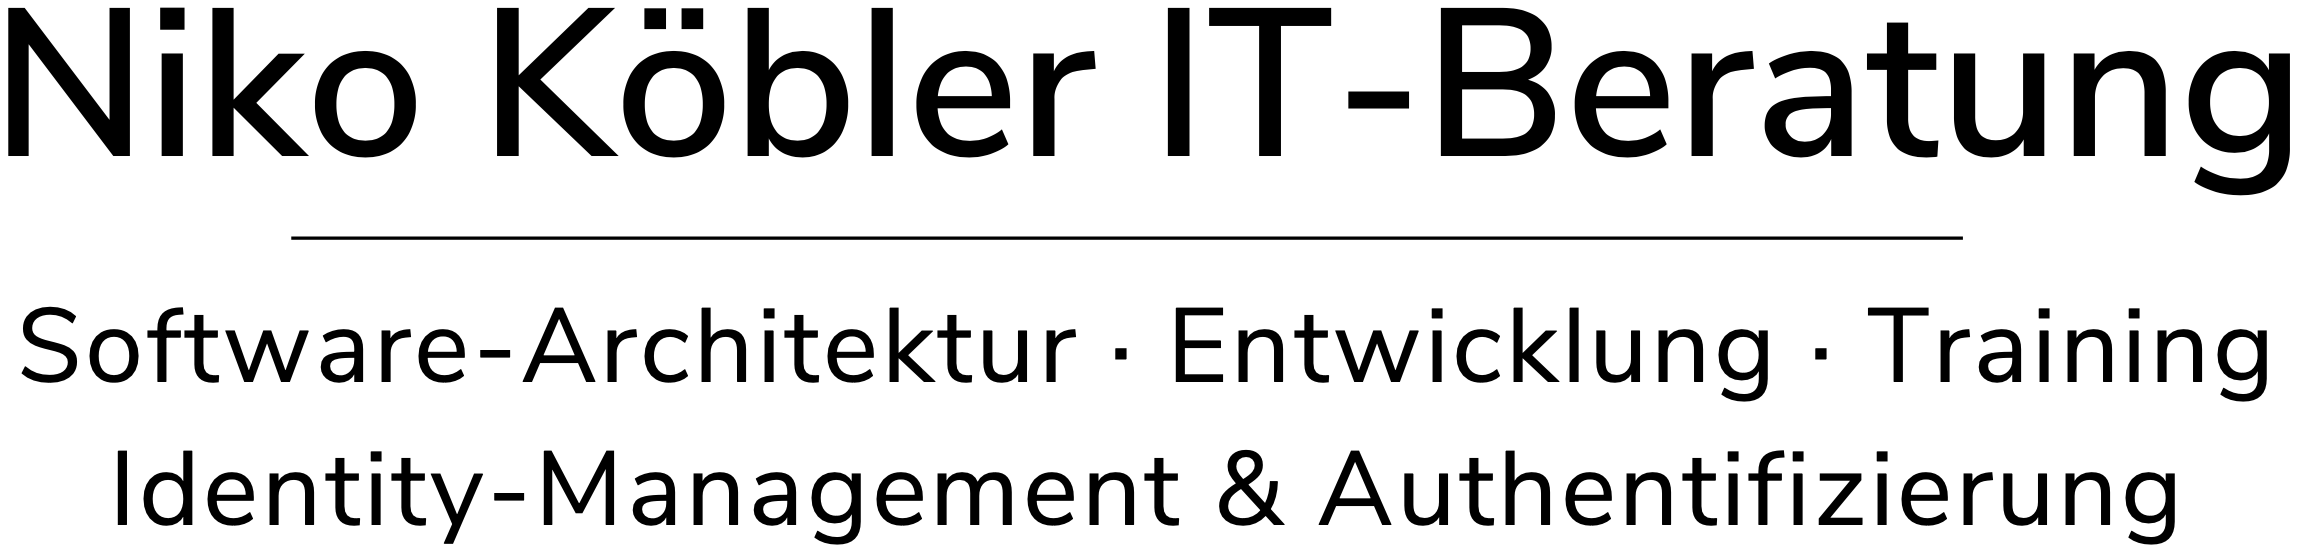 Niko Köbler IT-Beratung, Keycloak-Experte, Software-Architektur, Entwicklung, Training, Identity-Management & Authentifizierung, Keycloak, IAM, SSO, OpenID Connect, OIDC